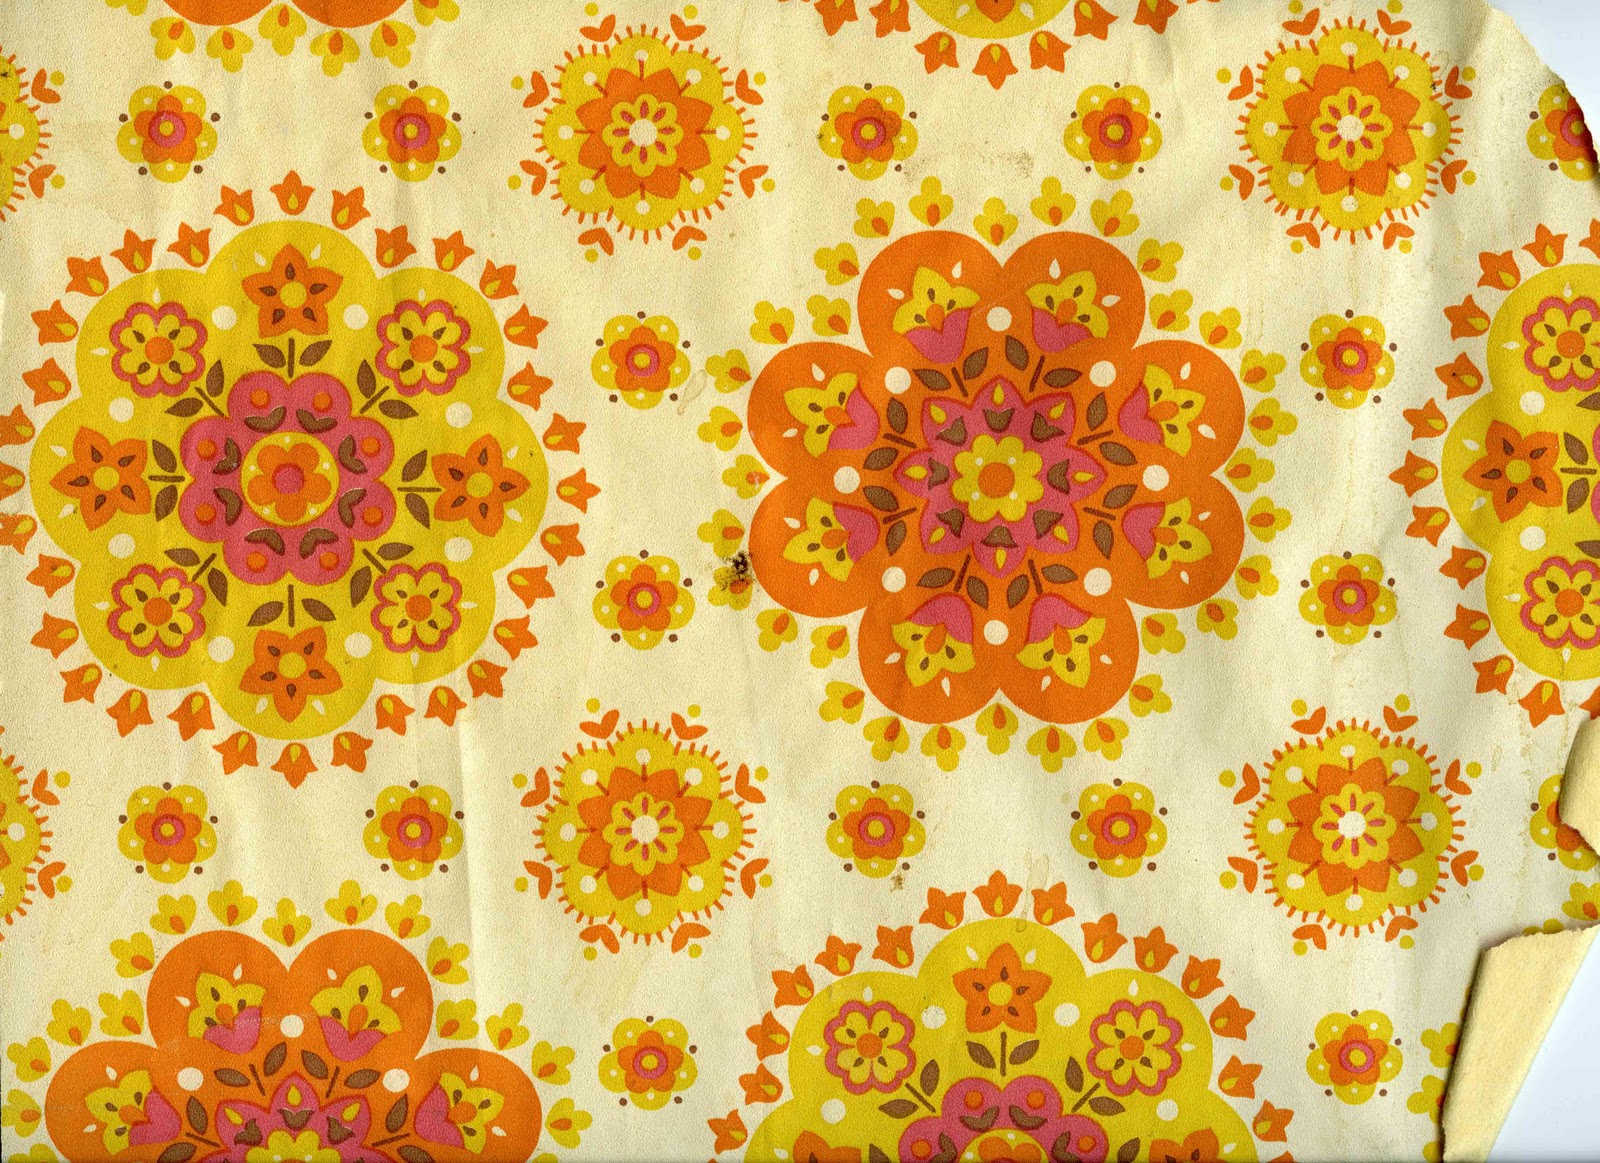 https://blogger.googleusercontent.com/img/b/R29vZ2xl/AVvXsEgKMdkDdDOLyb2VOH5Y81zSrt8zqhdfwQ7fQA6ypEf52ocrphClZqLK4j08fUOAzkb8jSkmGL95bSeq0cpmEBvrzJnGqcf721Gfw3QnzOZCNZ_6UjyTzc-8tfpr2dt40YJnquee8OFkDYM/s1600/wallpaper-60s-70s-yellow-orange-floral-circular-pattern-design-on-wall-of-house-built-in-about-1970-fading-and-tattered-rotated-5-DHD.jpg